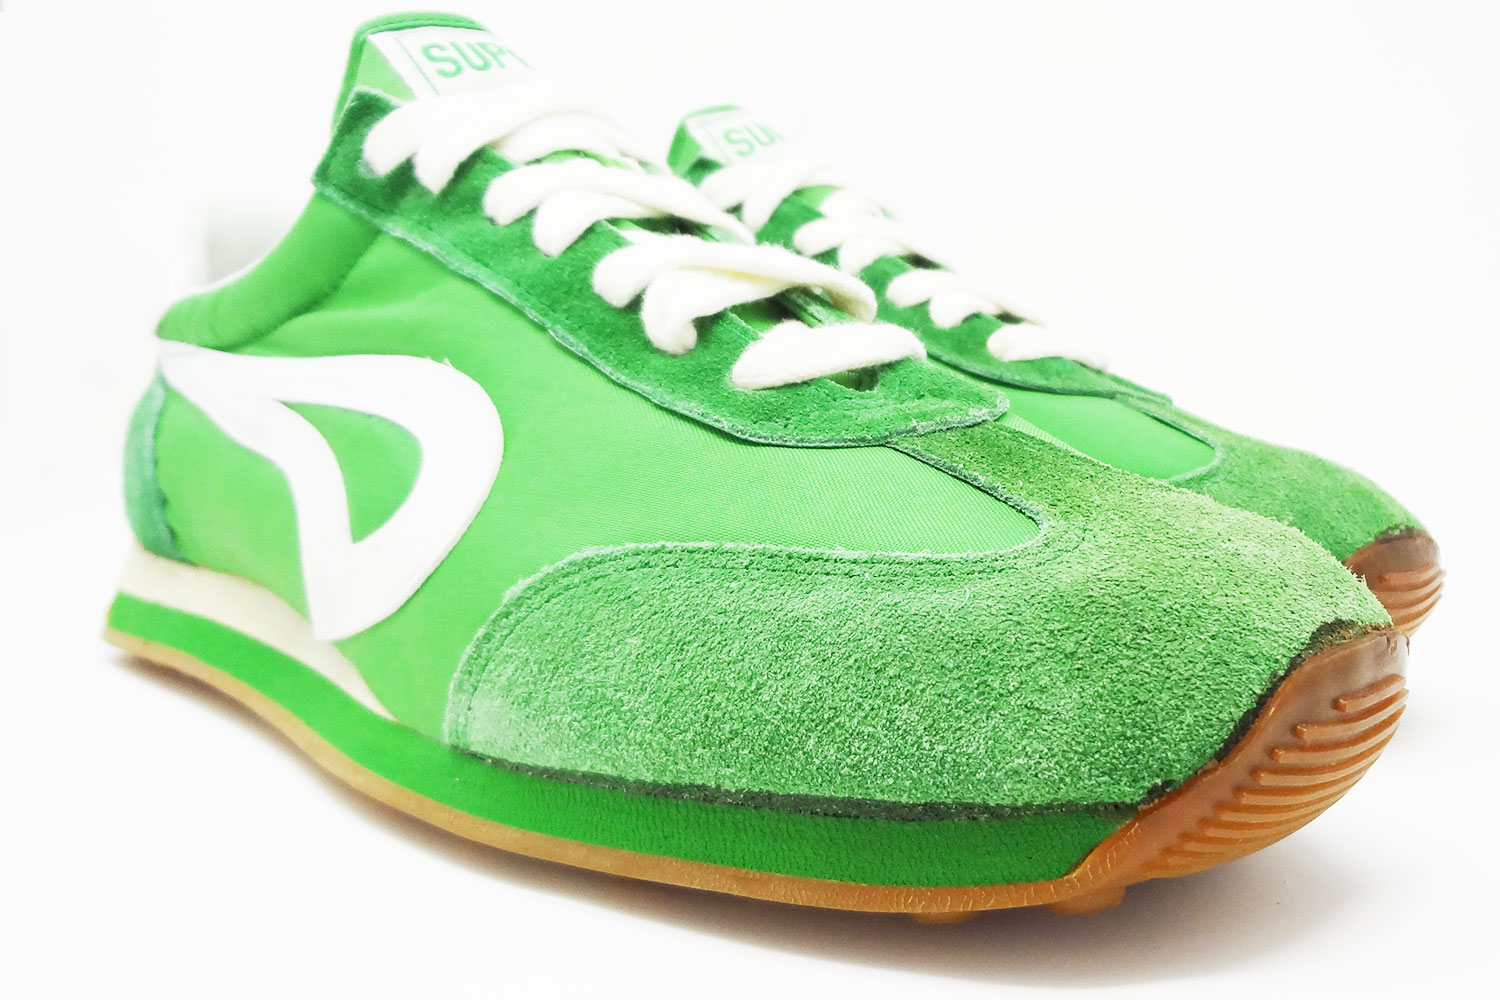 Old school SUPER brand vintage sneakers @ The Deffest